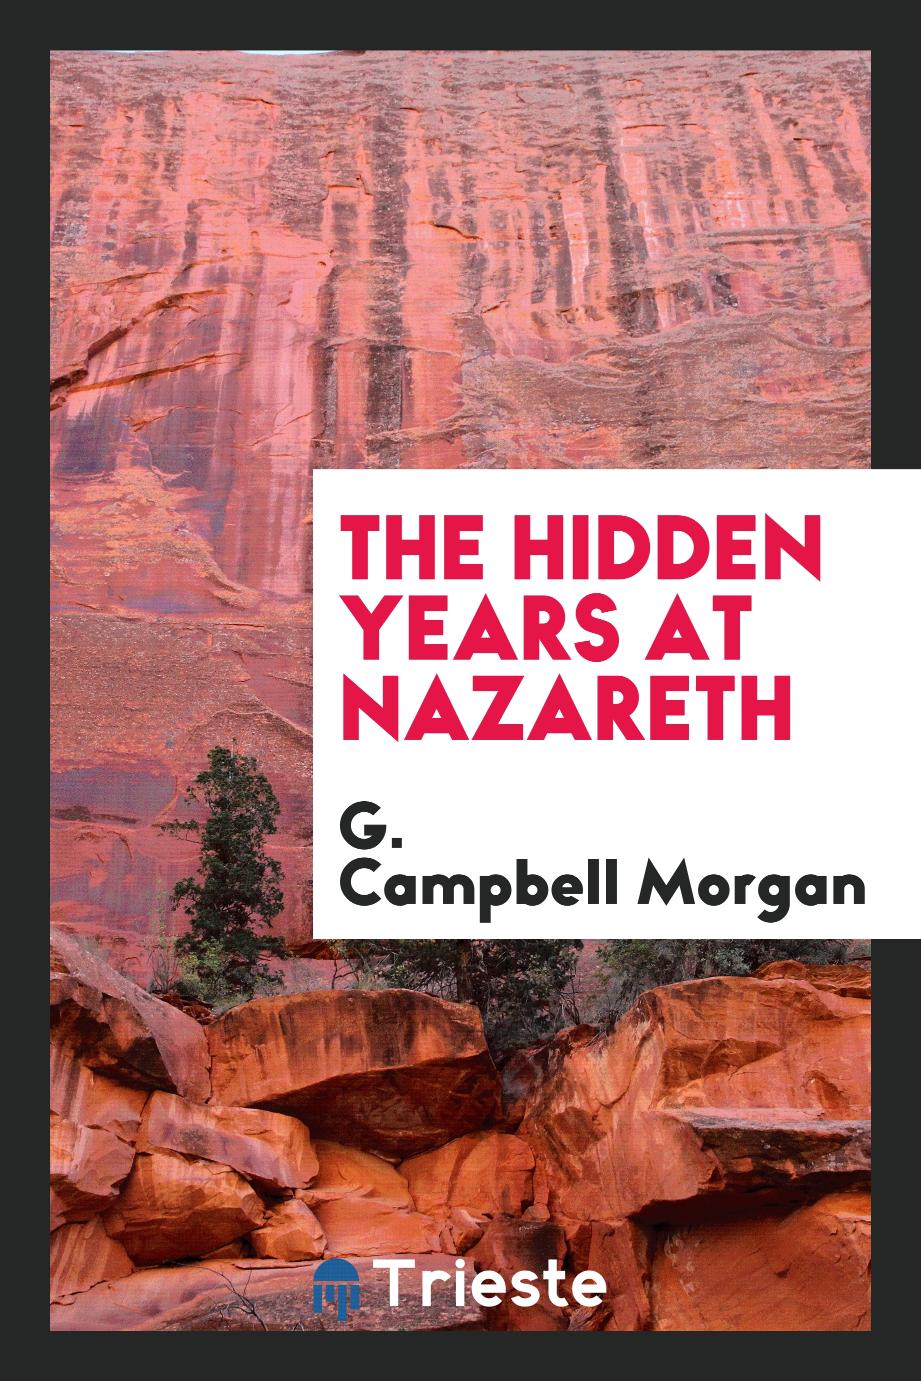 The hidden years at Nazareth